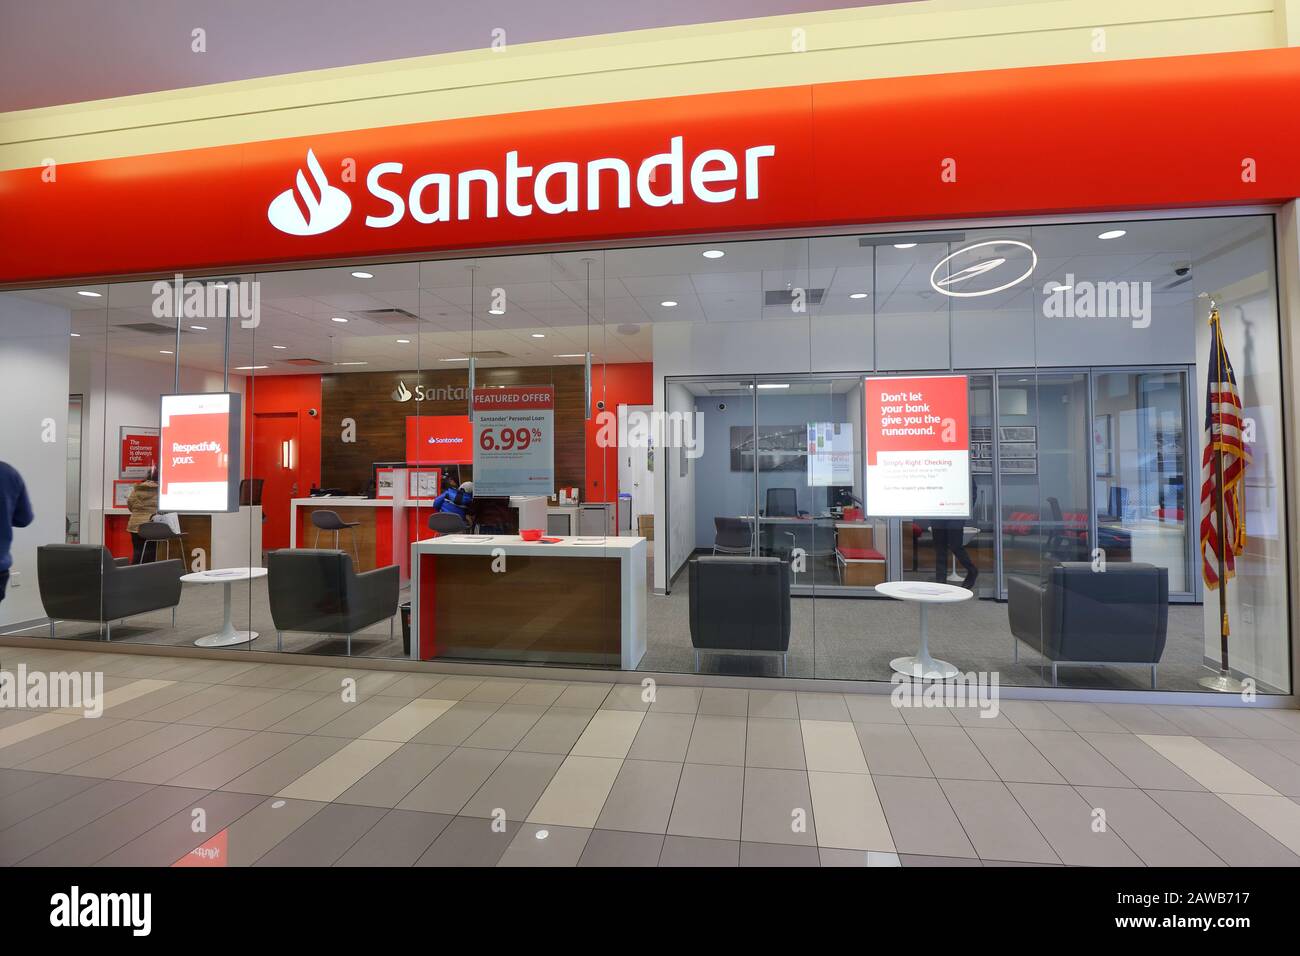 A Santander bank branch at the Staten Island Mall, New York, NY. Stock Photo